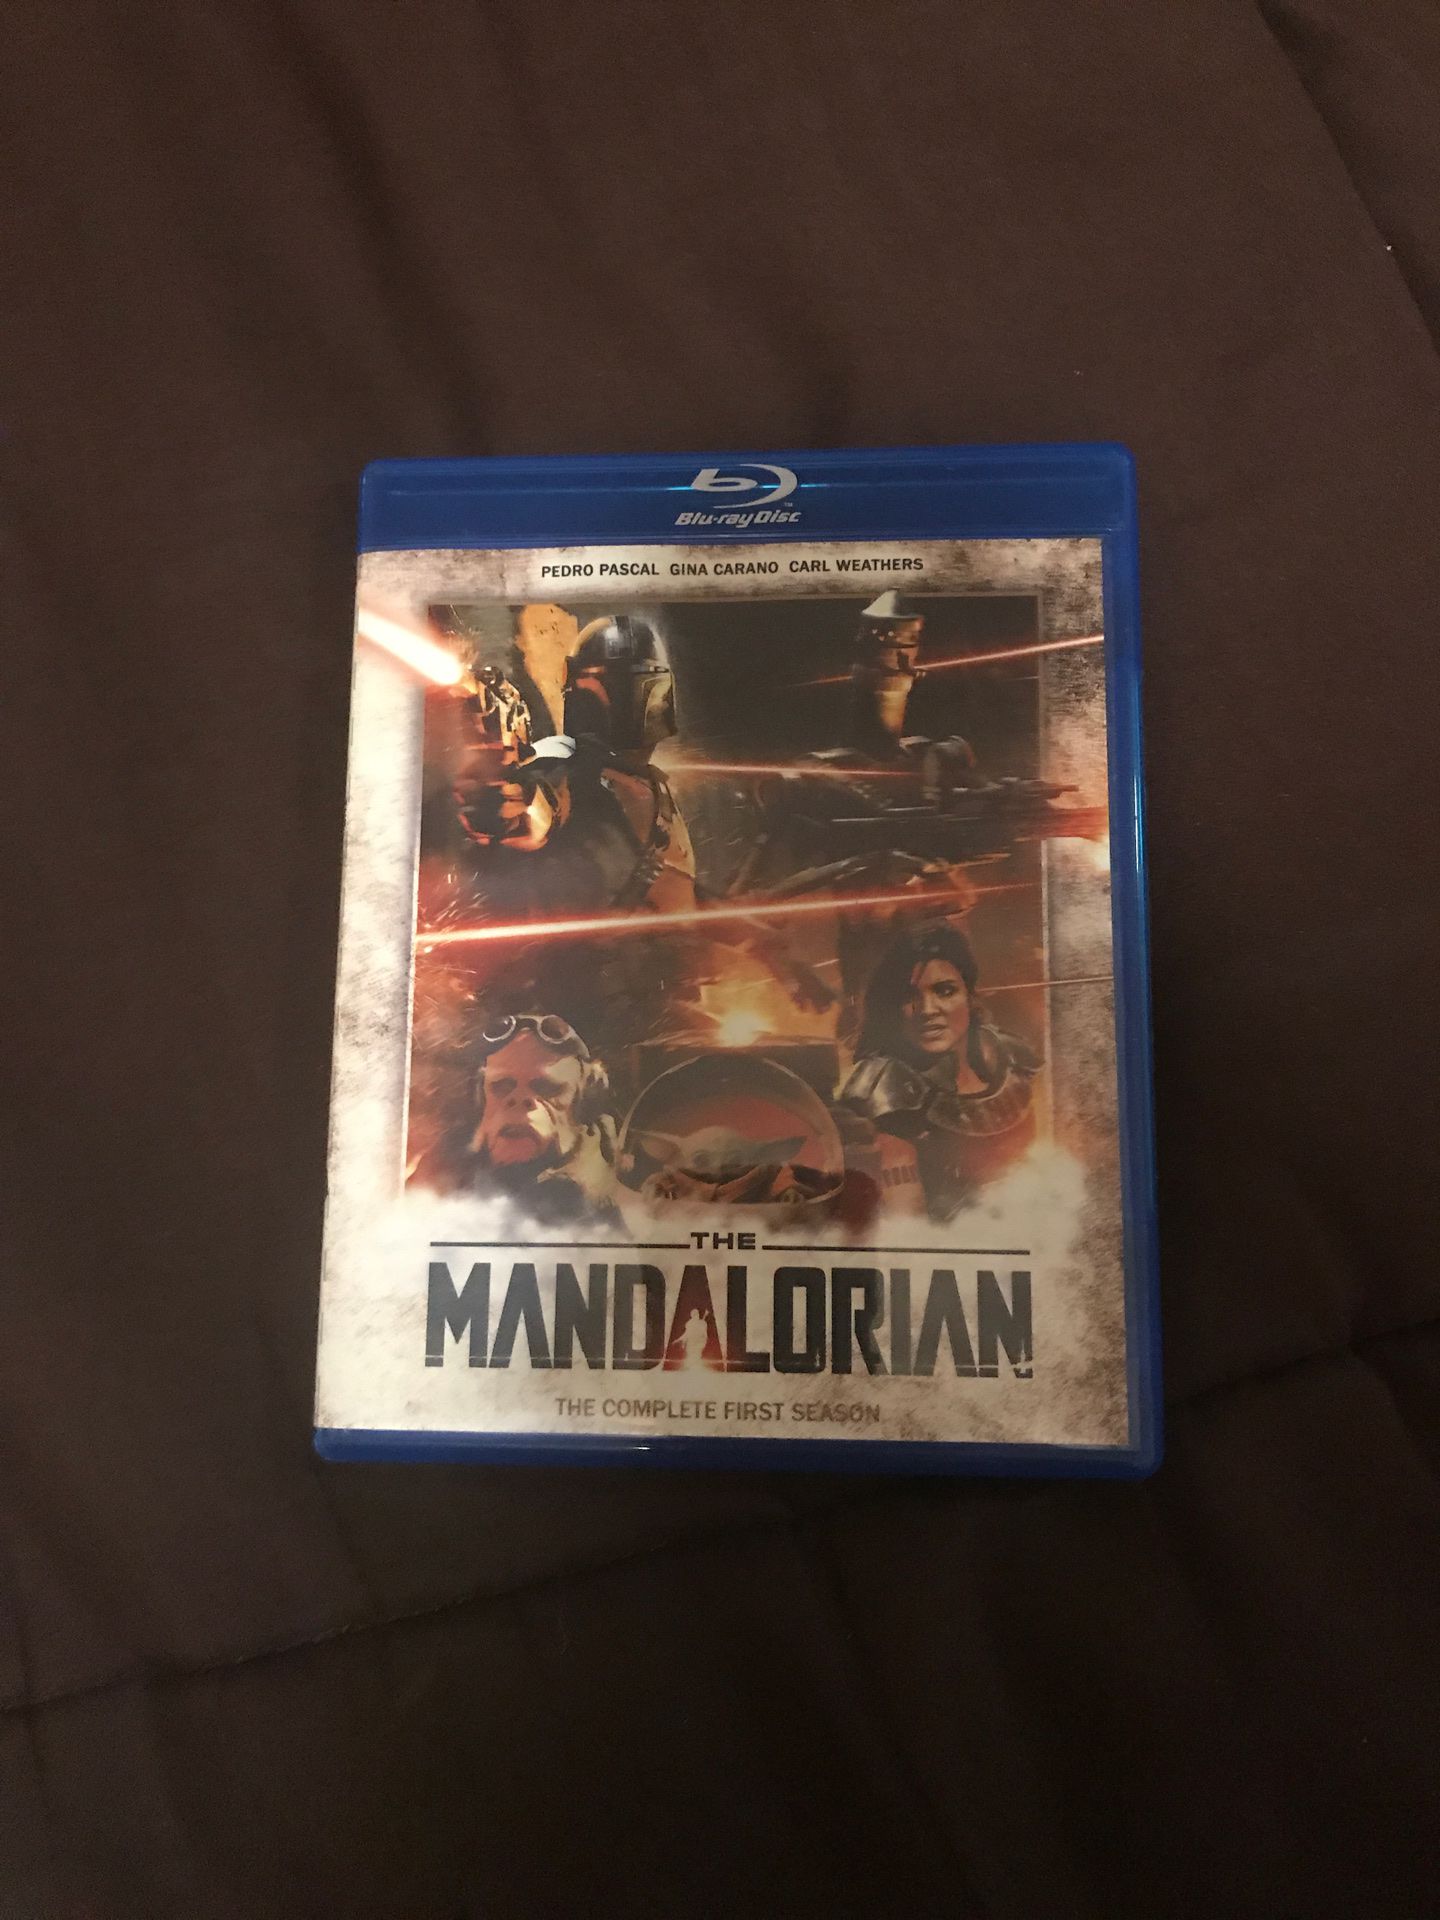 The Mandalorian on Blu-ray